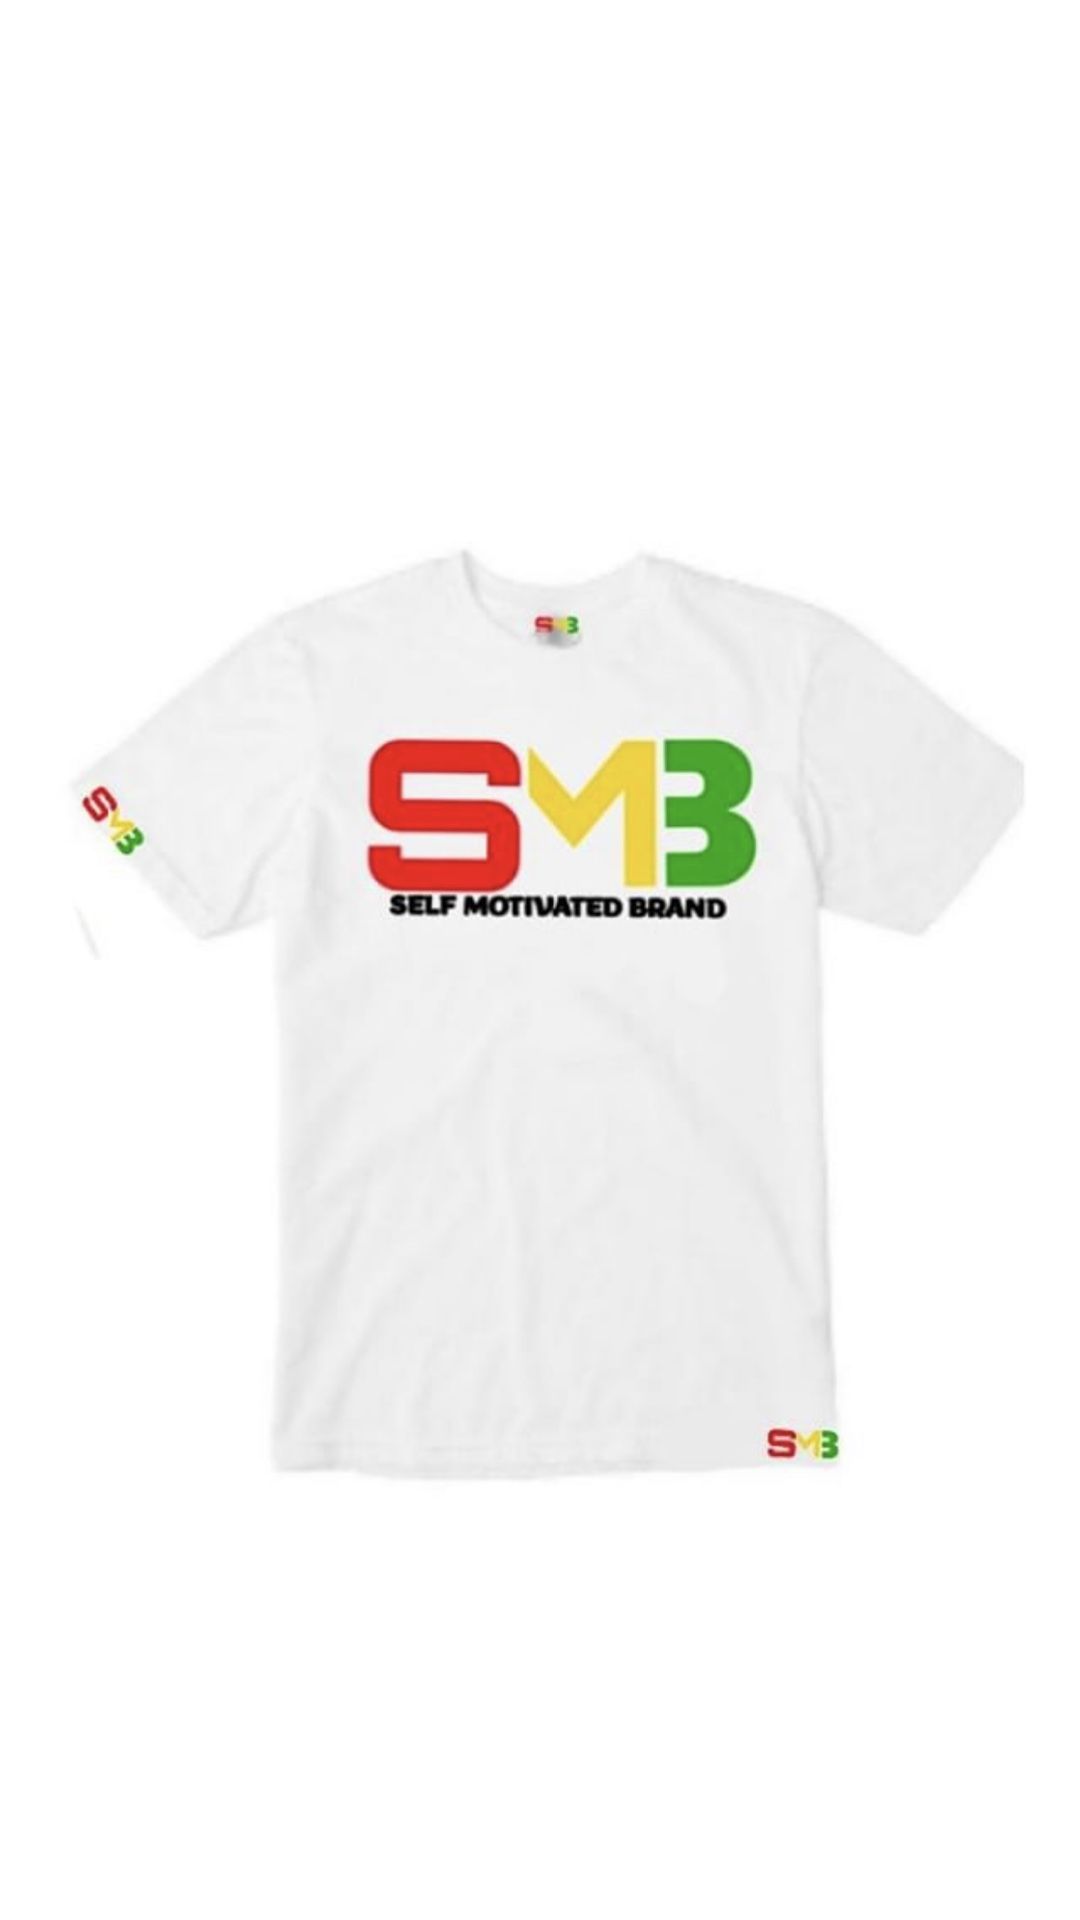 Self Motivated Brand {SMB}